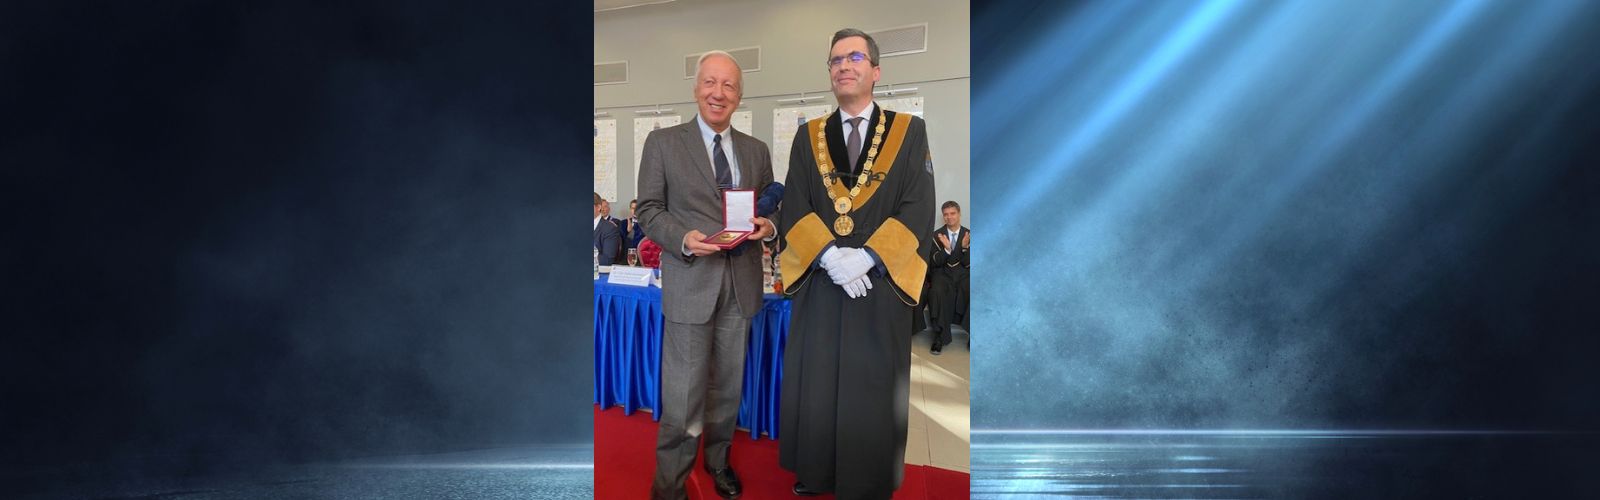 Paolo Fiorini riceve il “Rudolf Kálmán Professor Title”